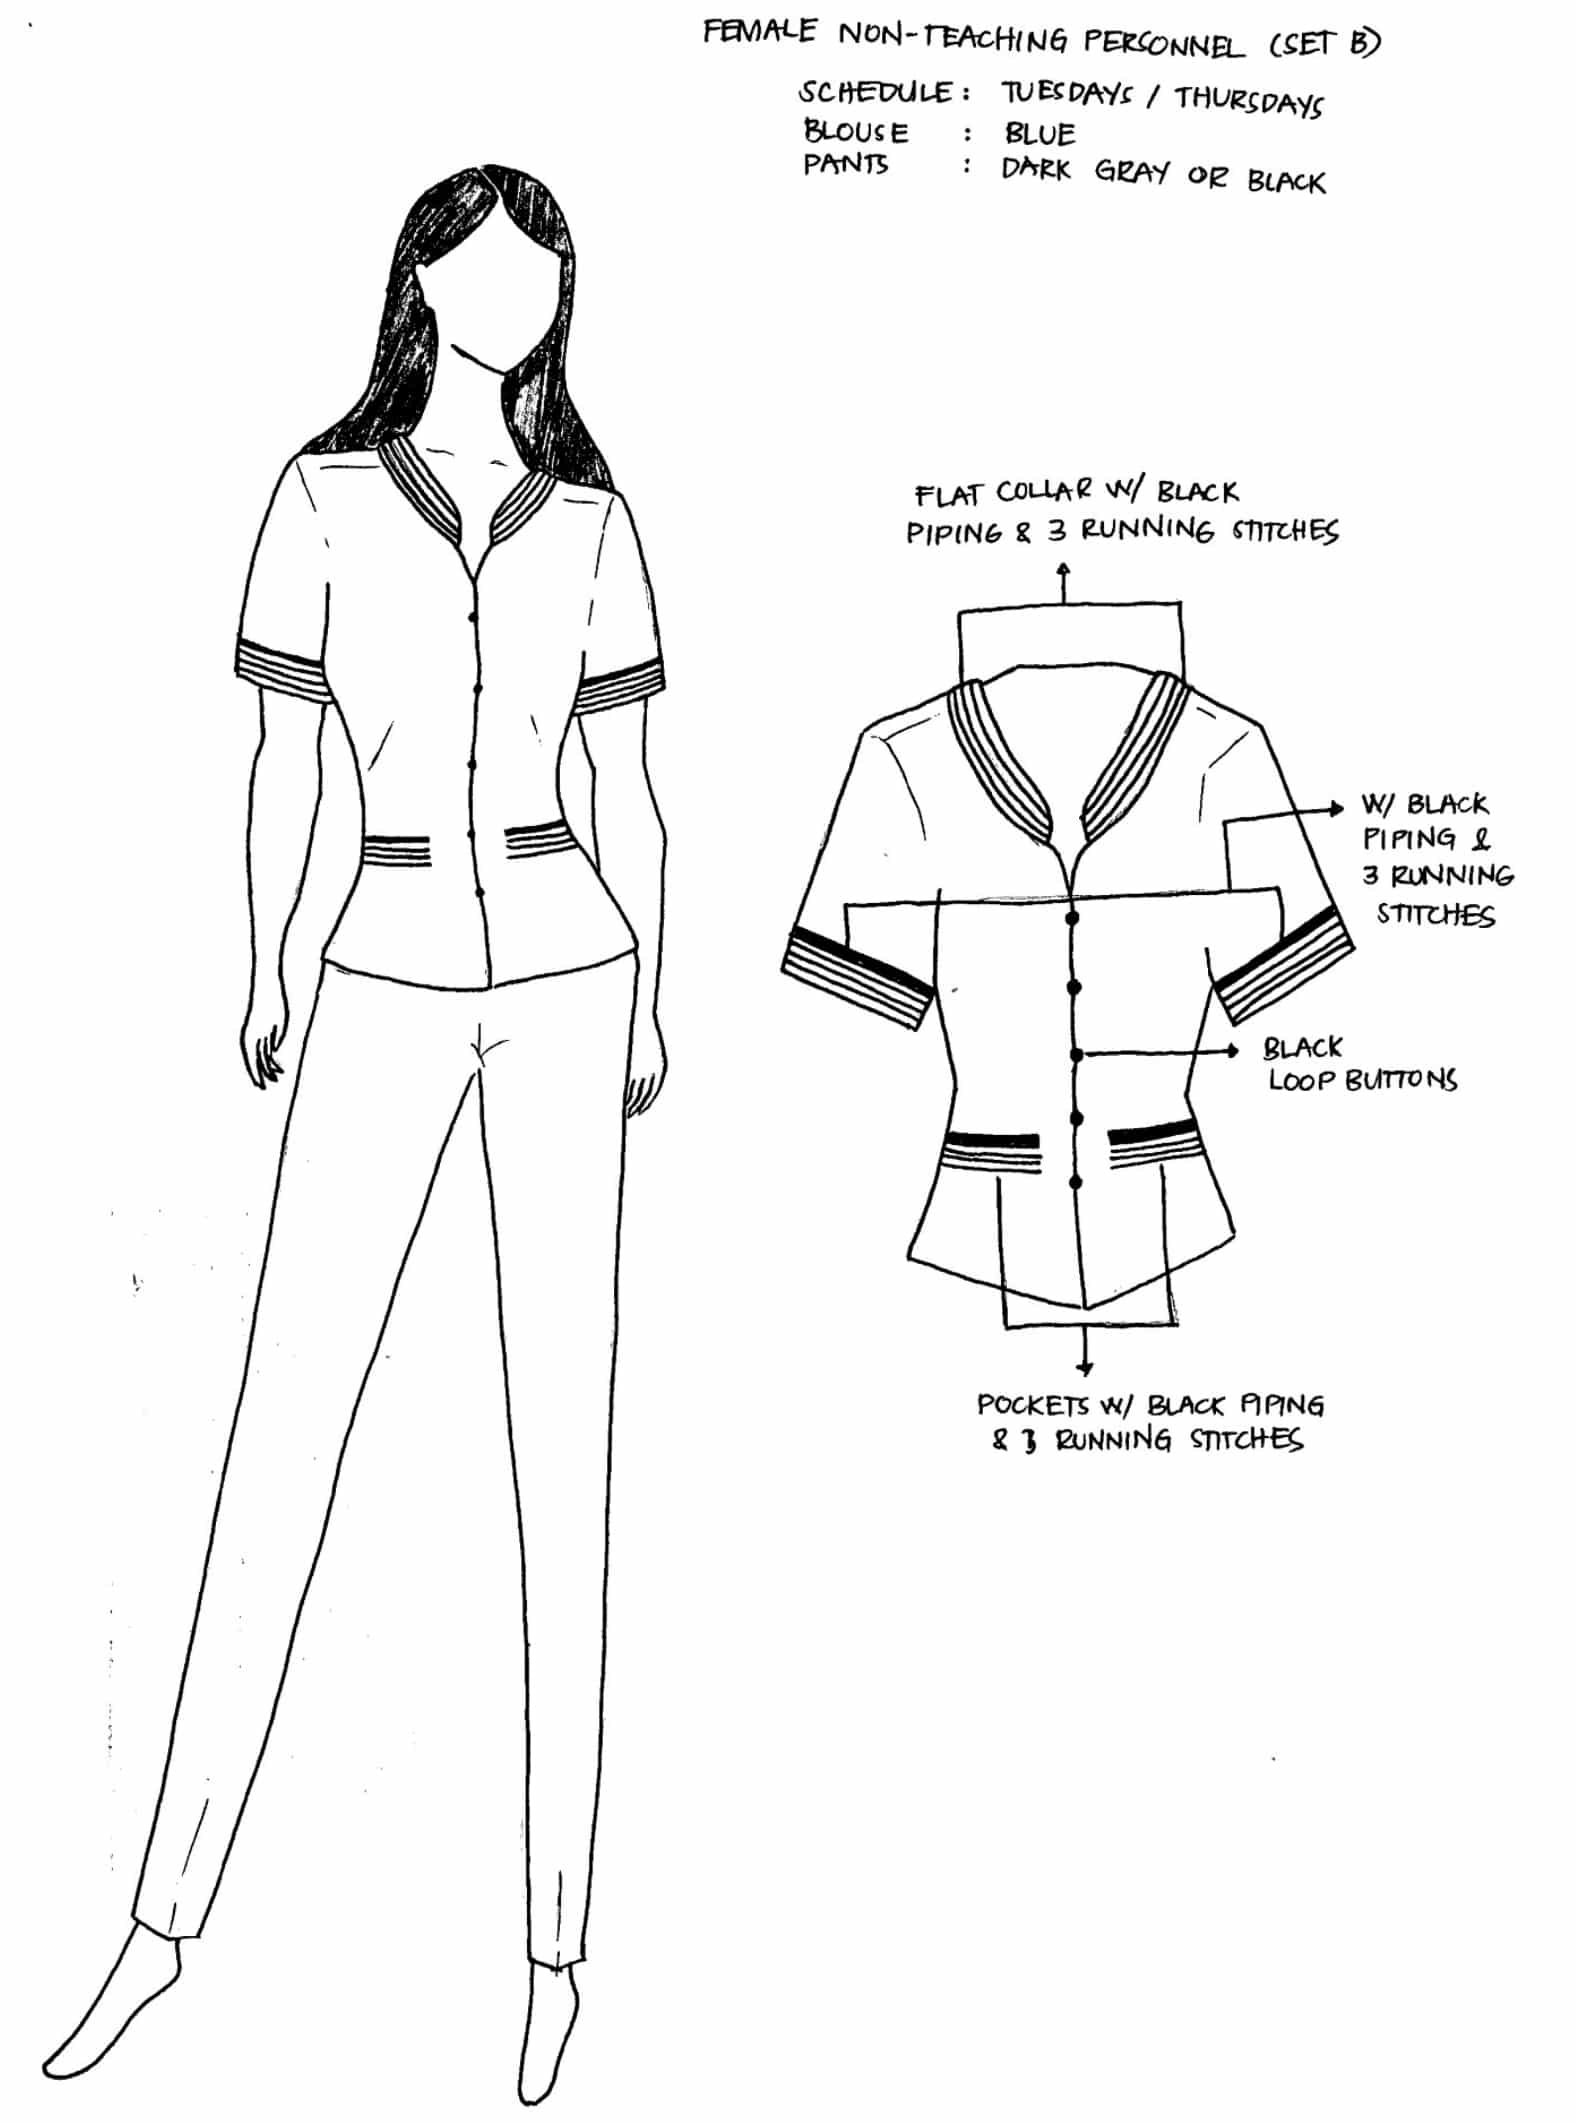 DepEd National Uniforms Female Non-Teaching Personnel (SET B)